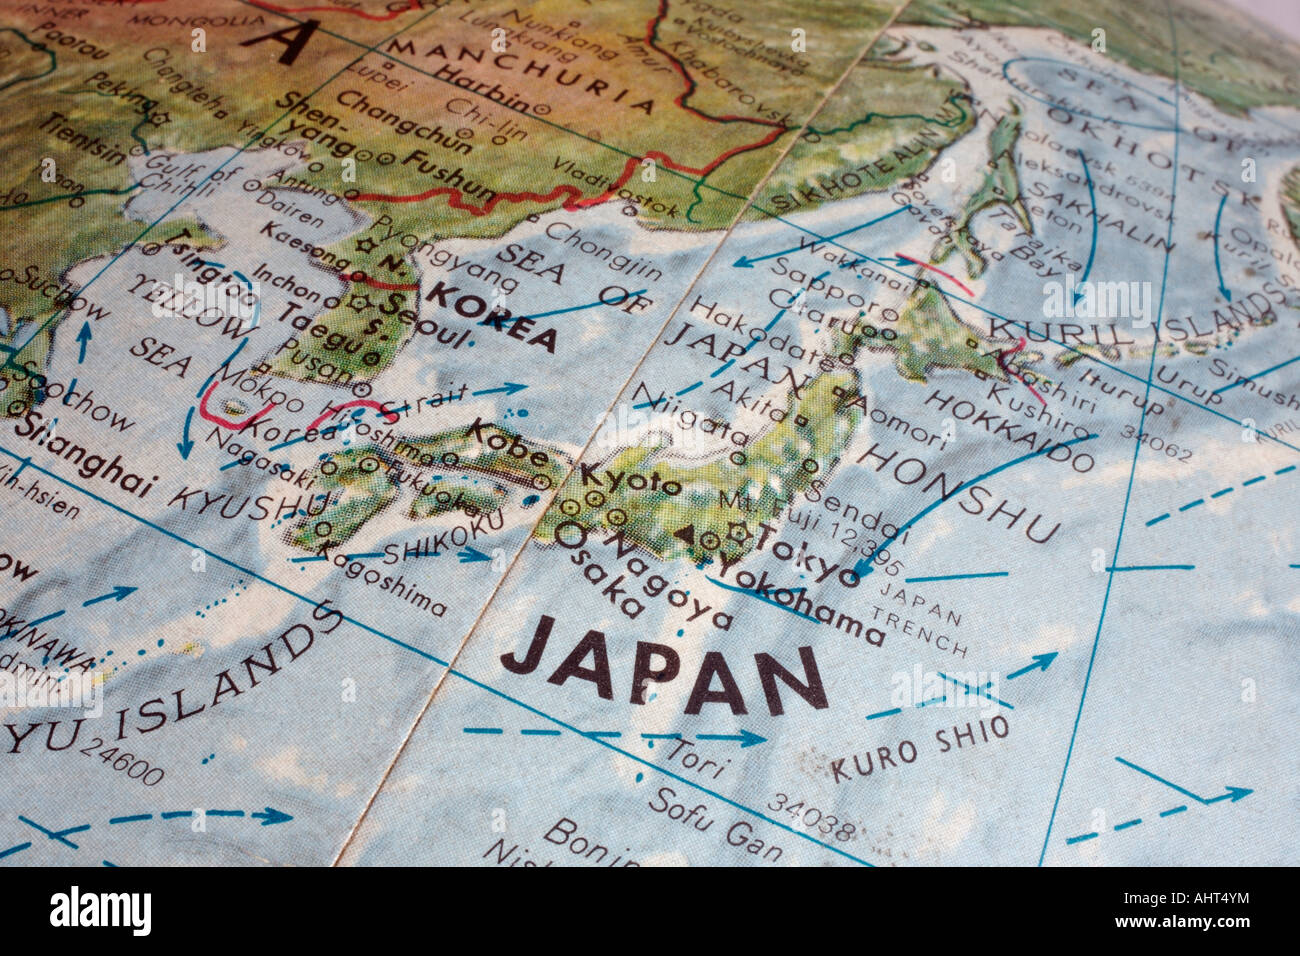 Japan on globe Stock Photo - Alamy